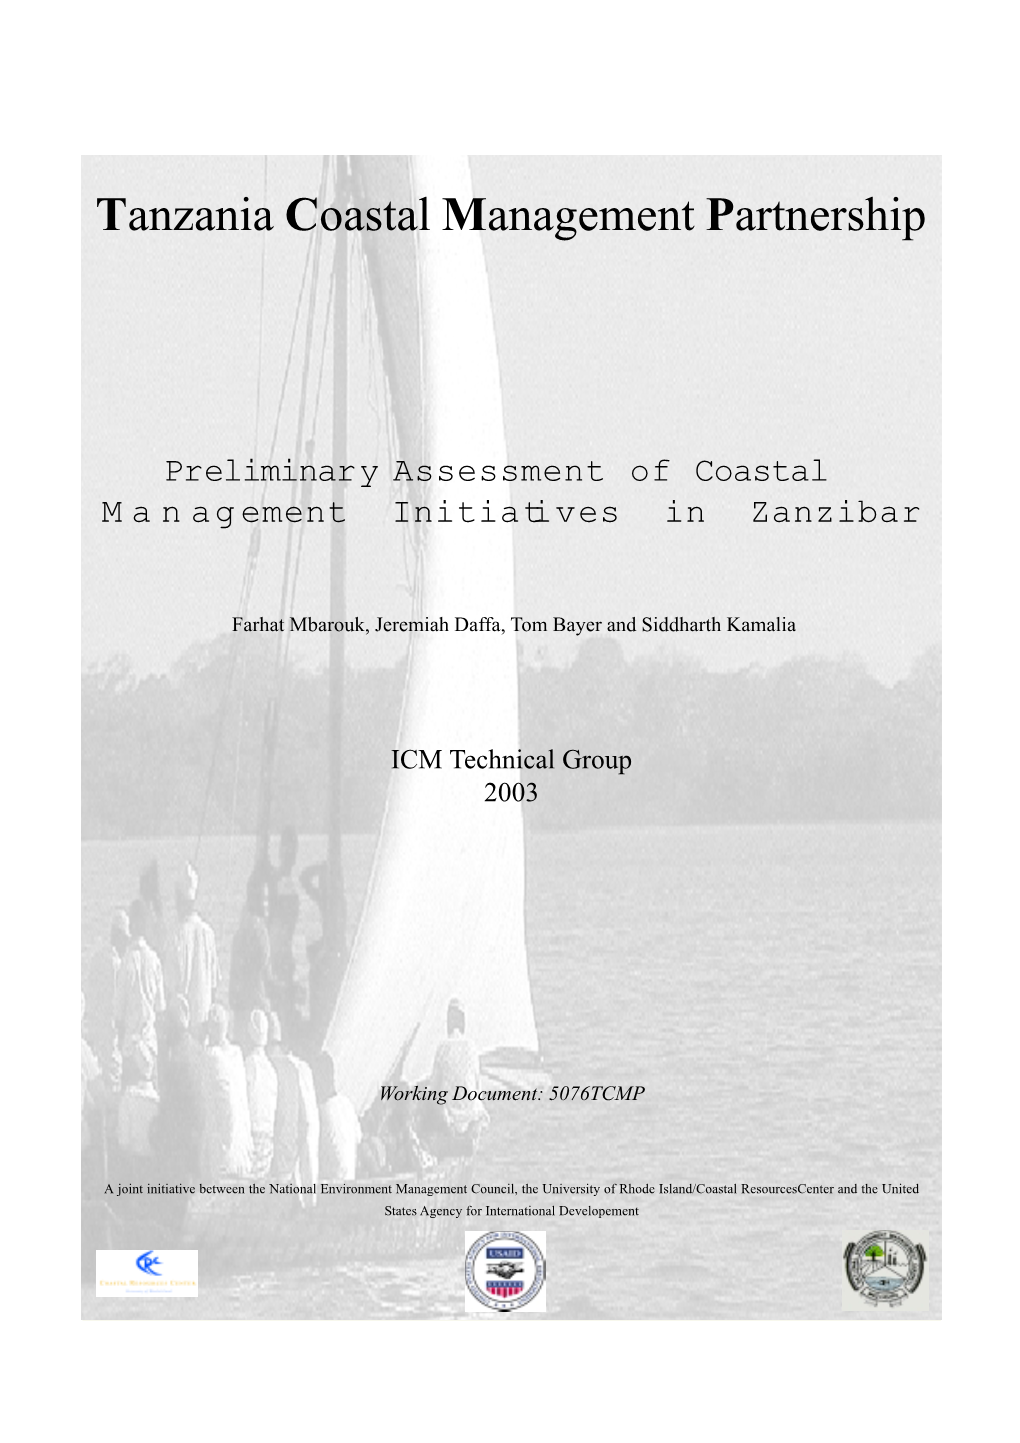 Preliminary Assessment of Coastal Management Initiatives in Zanzibar